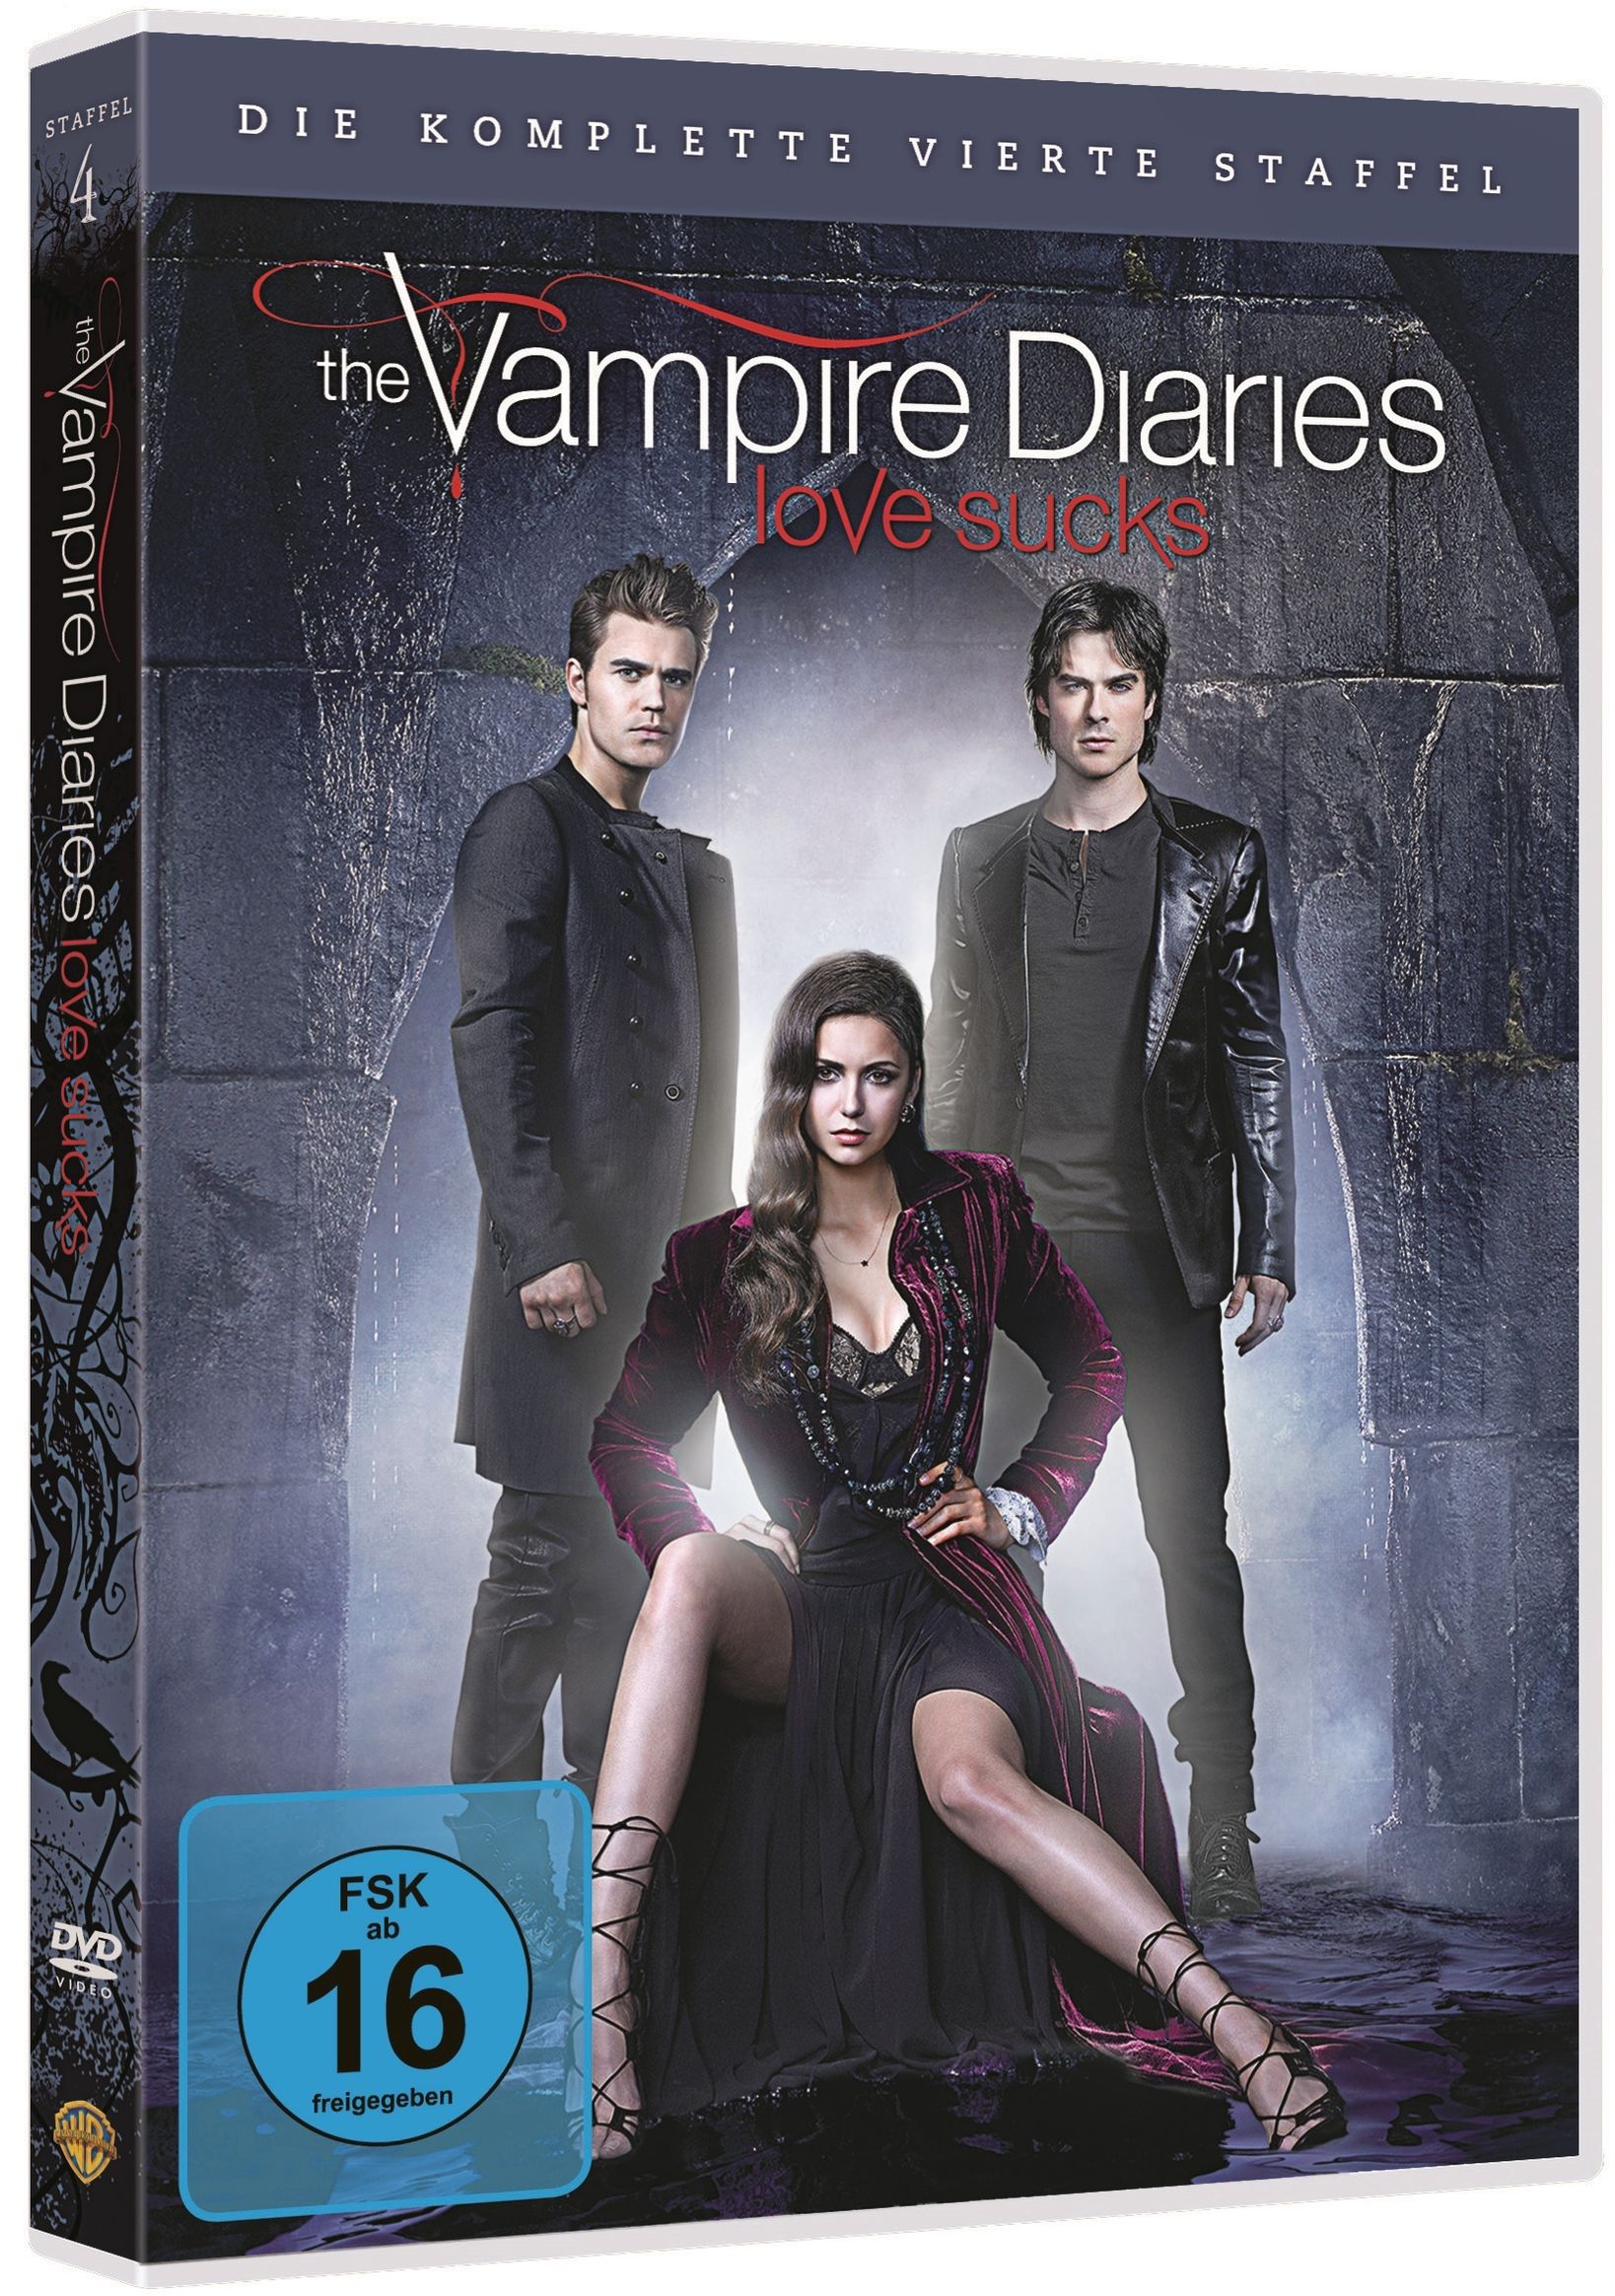 48 HQ Pictures Wann Kommt Die Neue Staffel Vampire Diaries / The Vampire Diaries Staffel 1 8 Blu Ray Set 1 2 3 4 5 6 7 8 Die Komplette Serie Ebay